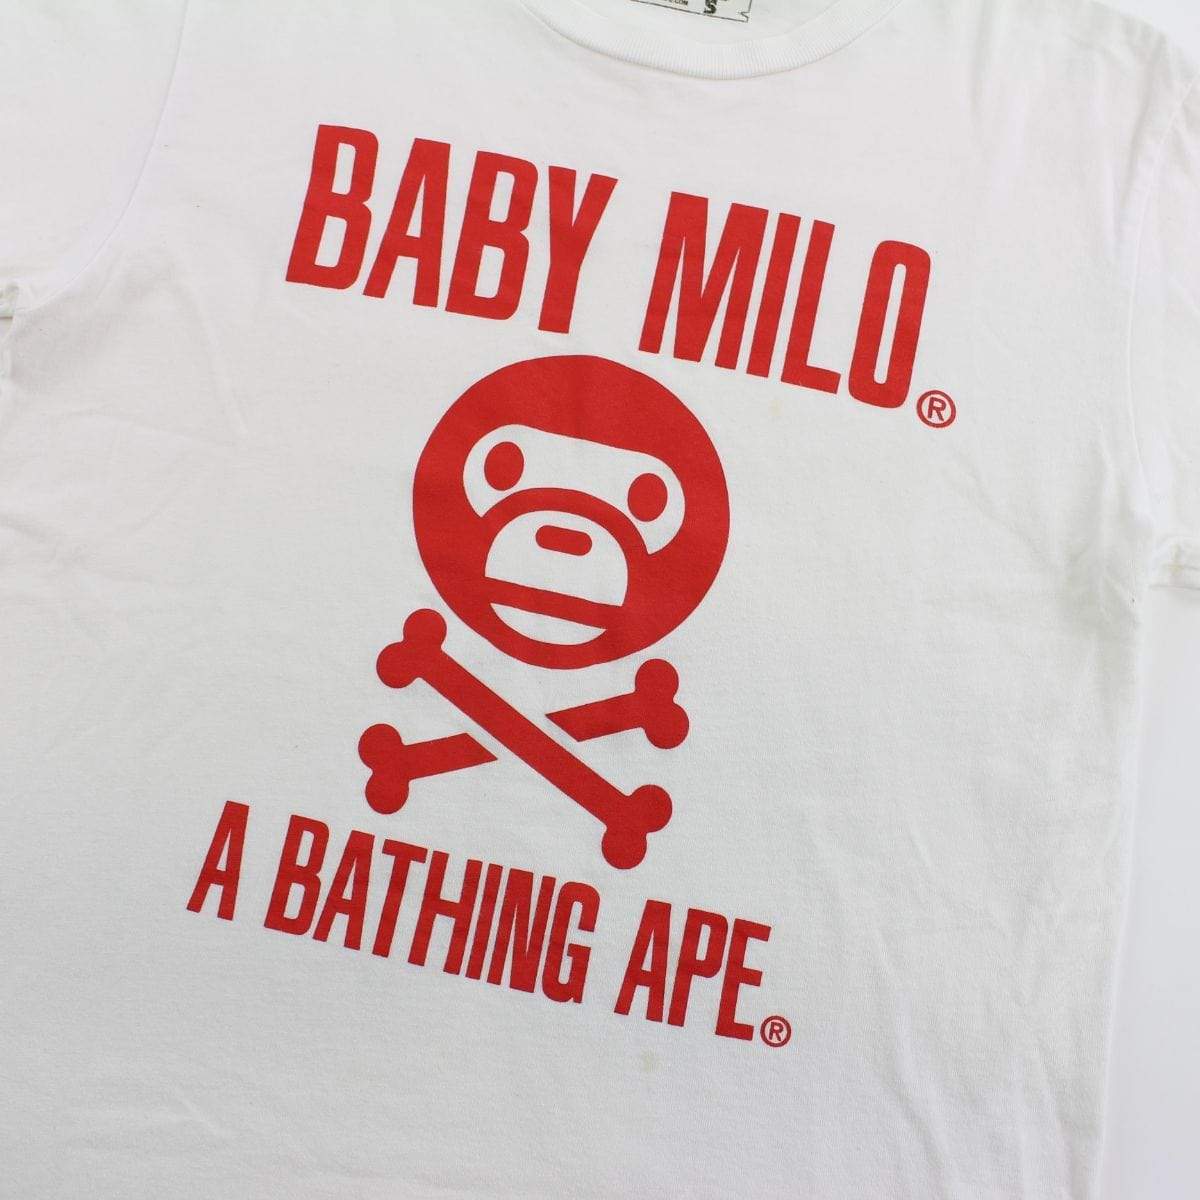 Bape Baby Milo Red Crossbones Tee White - SaruGeneral